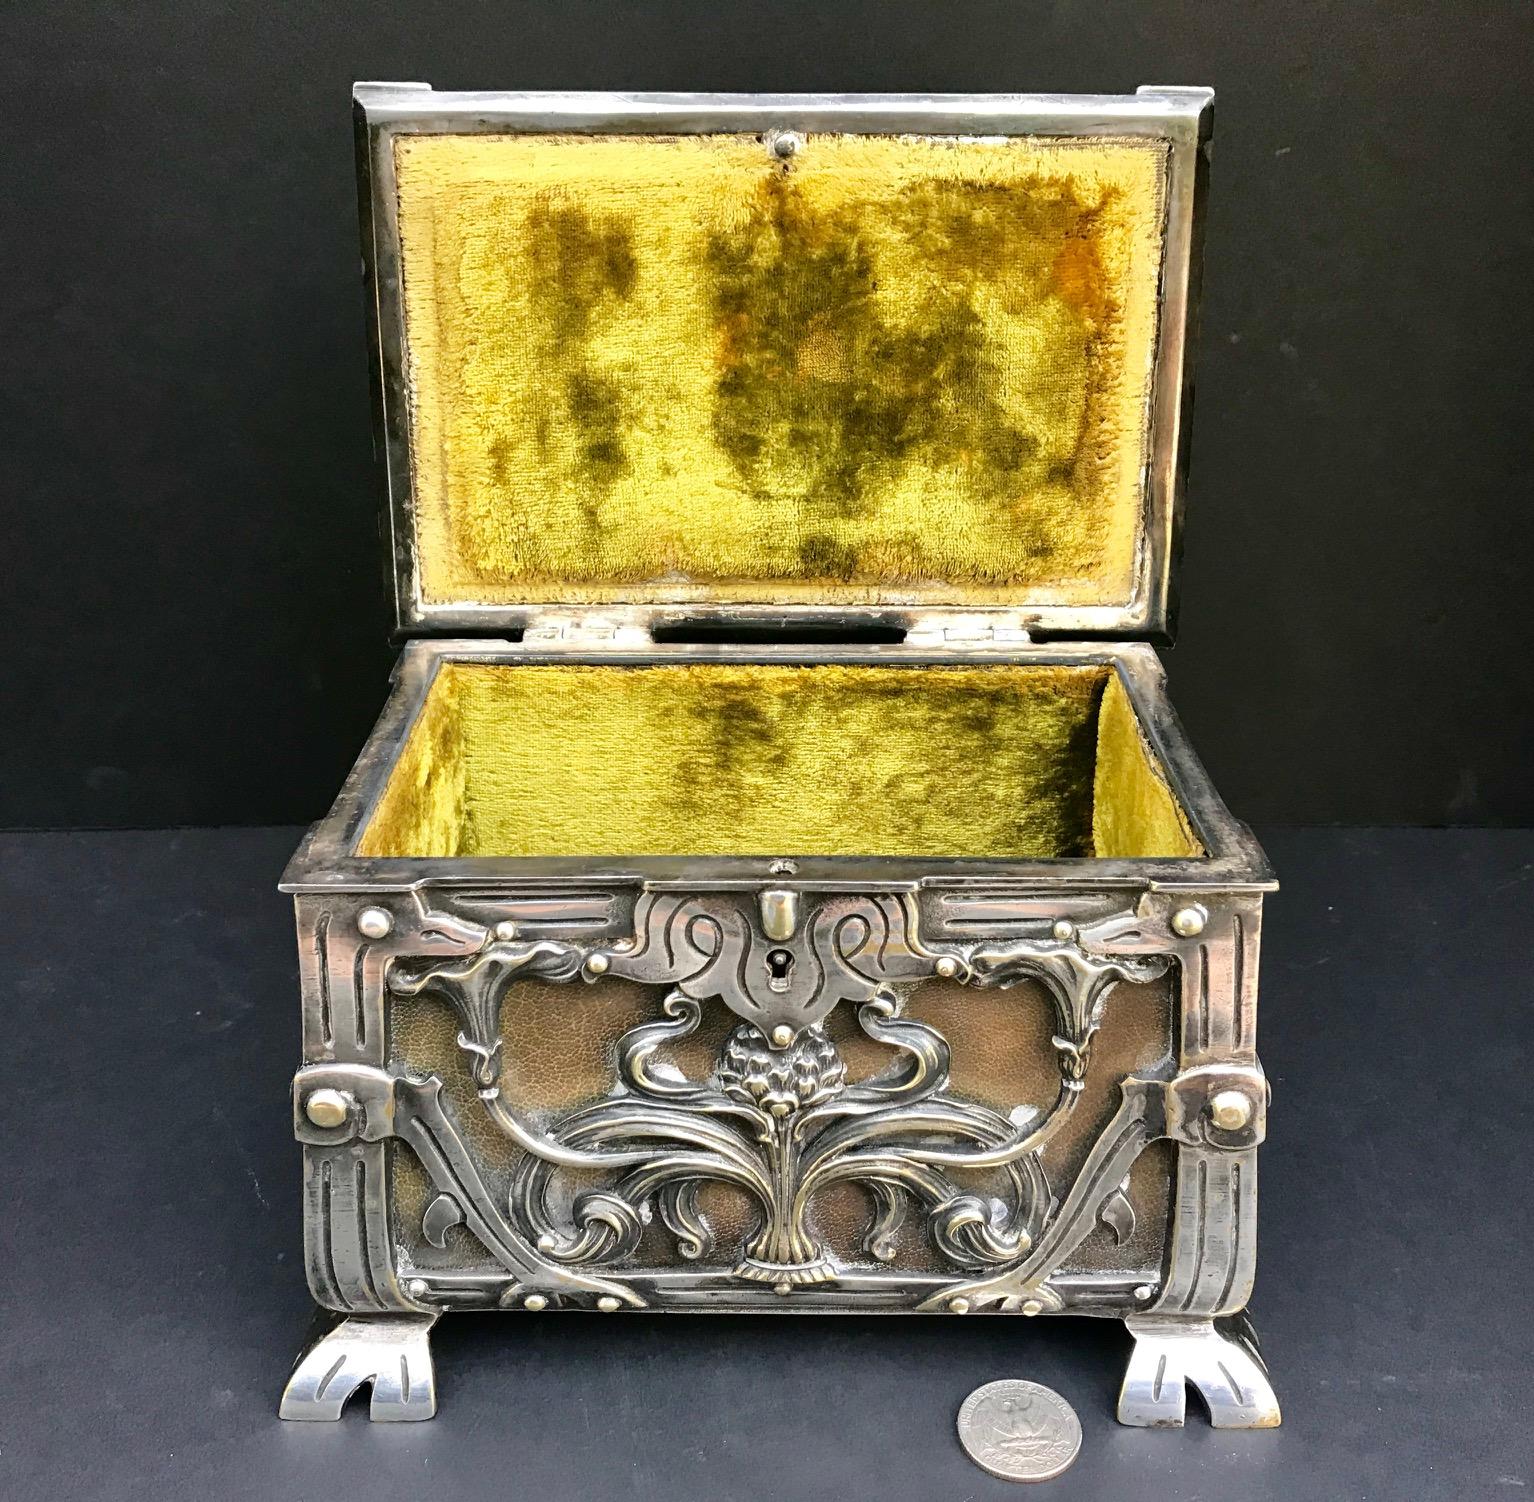 20th Century Austria/France Art Nouveau Silvered Heavy Bronze Jewelry Box Casket, circa 1900